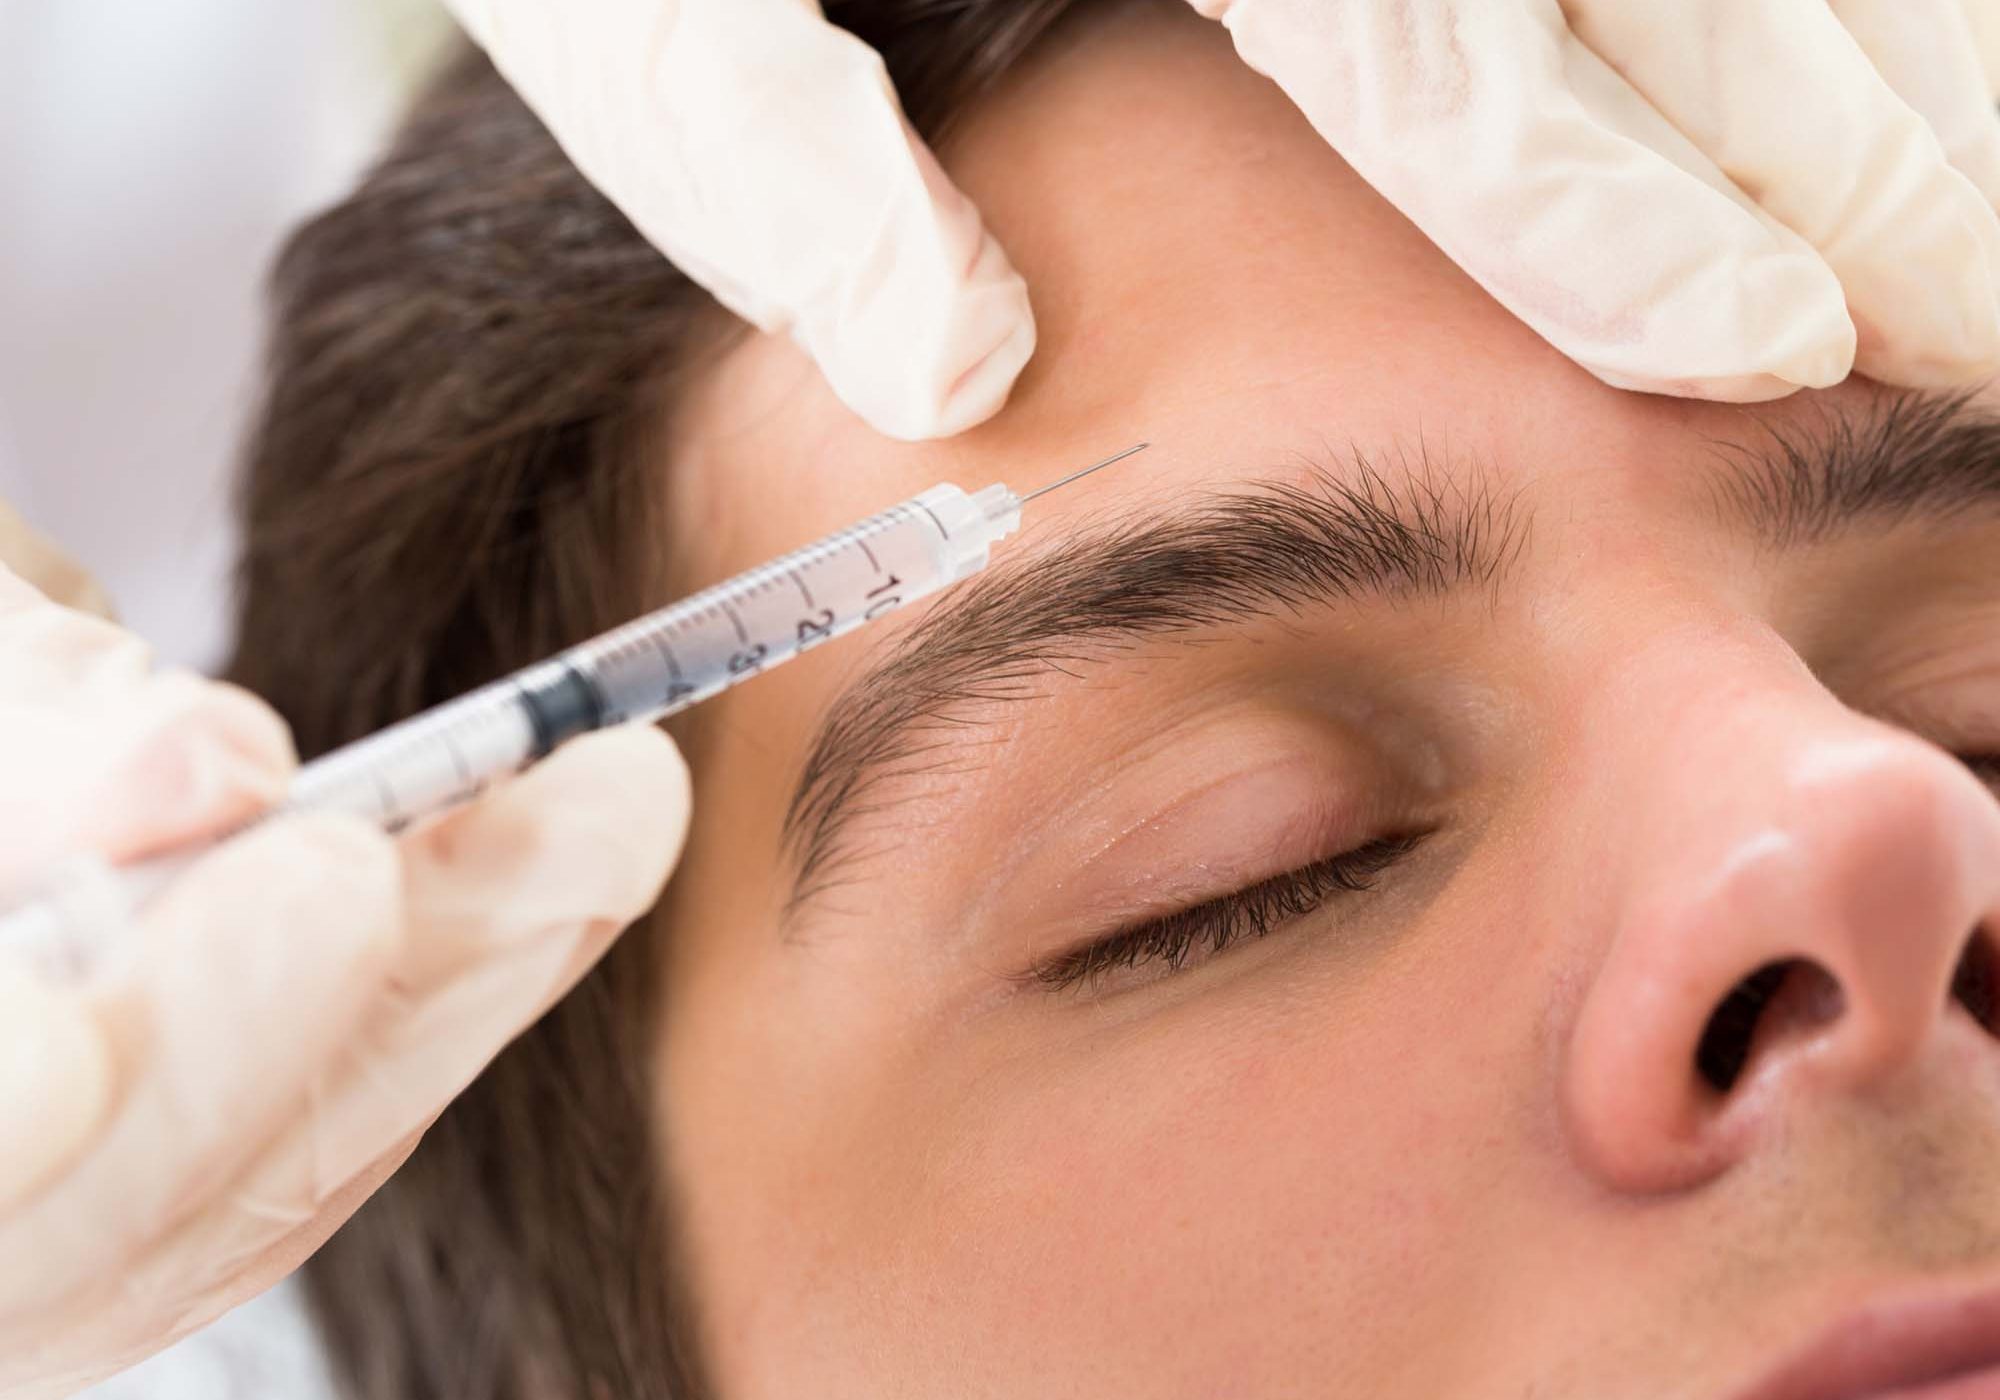 Young Man Having Botox Treatment At Beauty Clinic